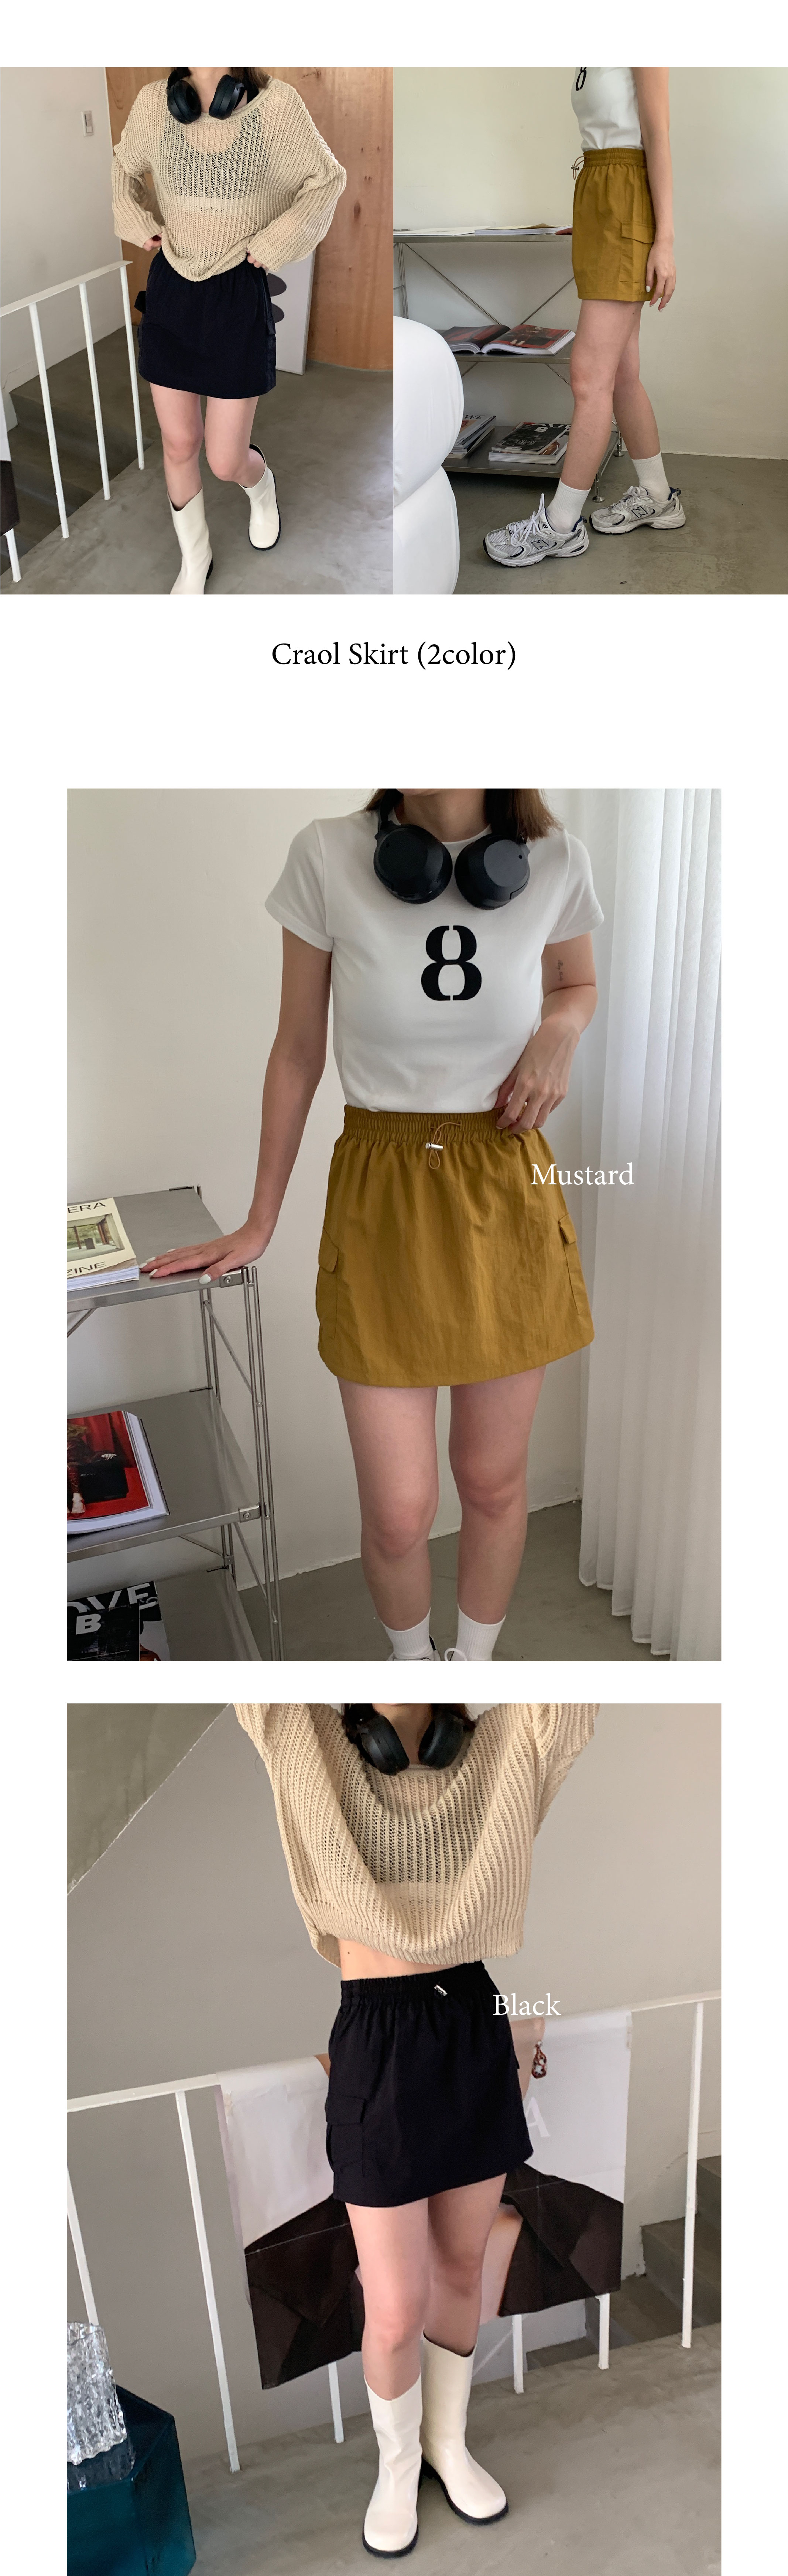 Craol Skirt (2color)_工作區域 1.jpg